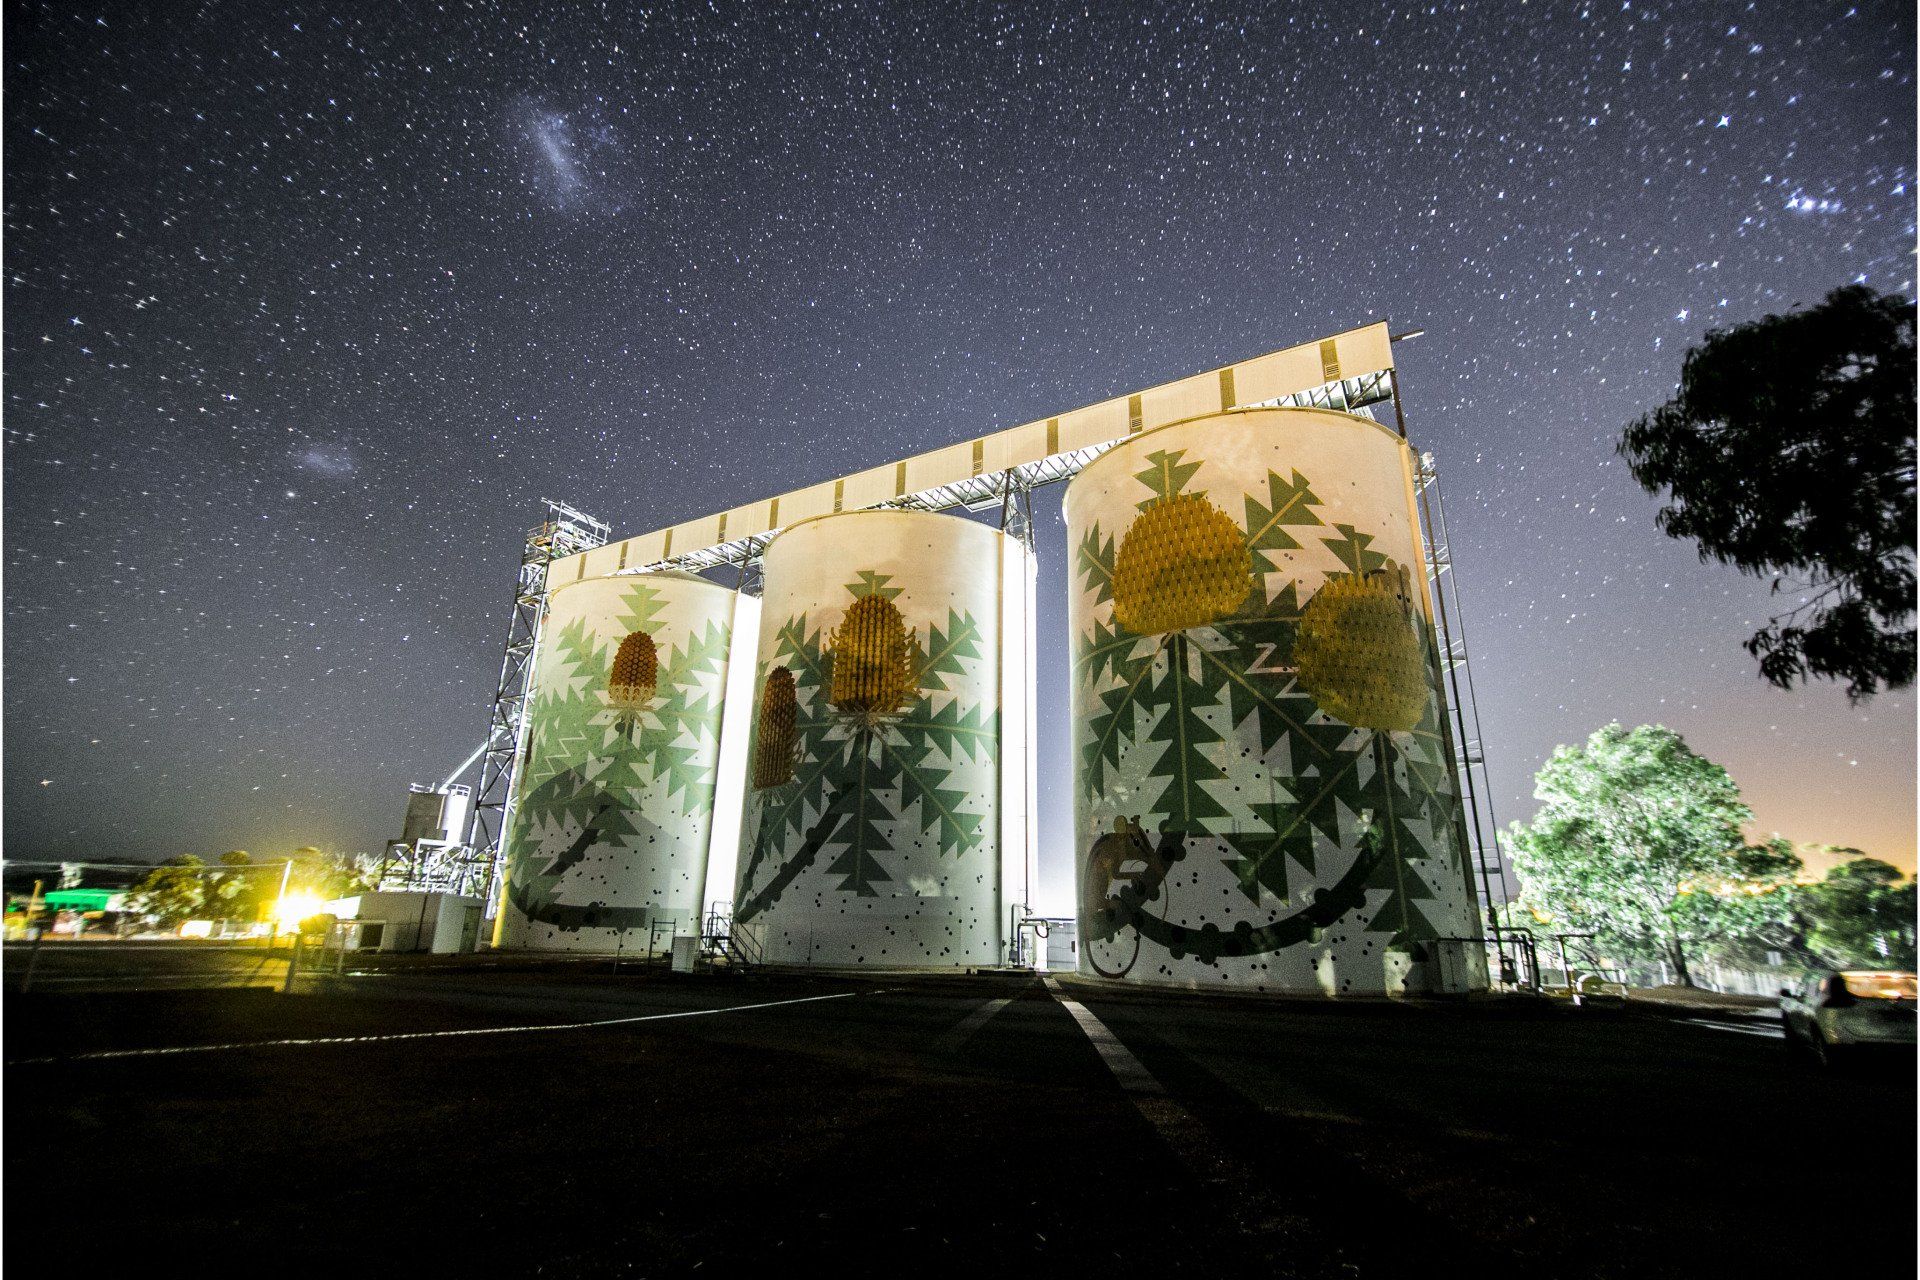 Newdegate Silo Art, Western Australia silo art, Australian Silo Art Trail, PUBLIC SILO  TRAIL IN WESTERN AUSTRALIA